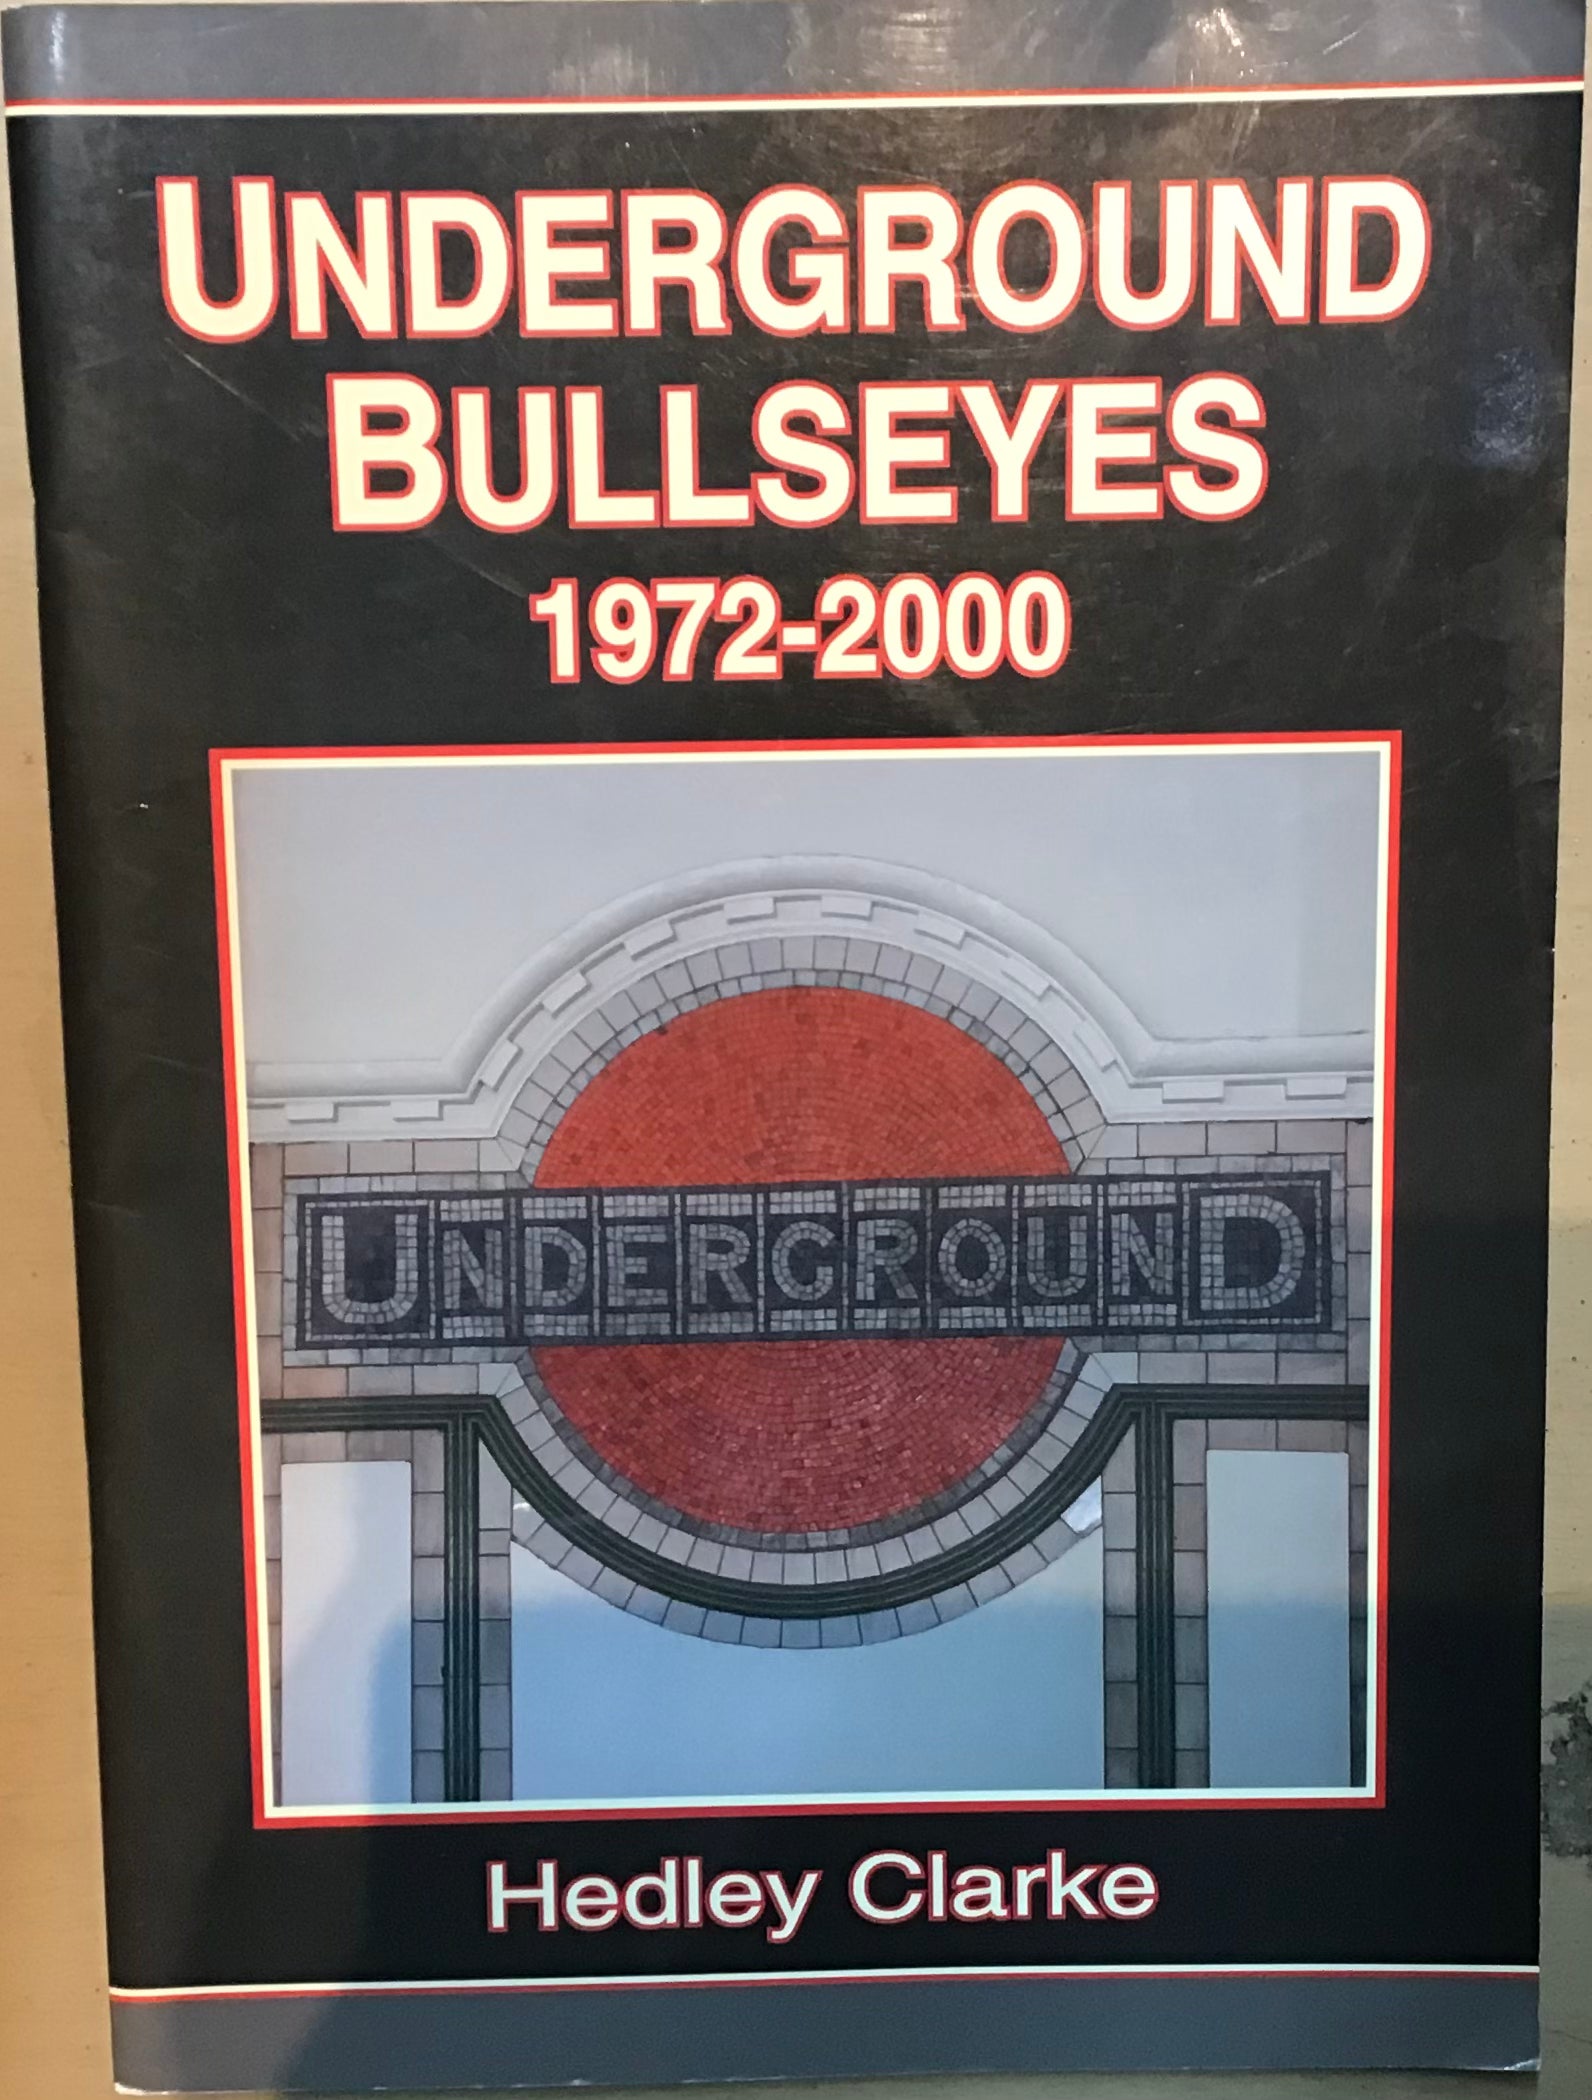 Underground Bullseyes 1972-2000 by Hedley Clarke - Chester Model Centre